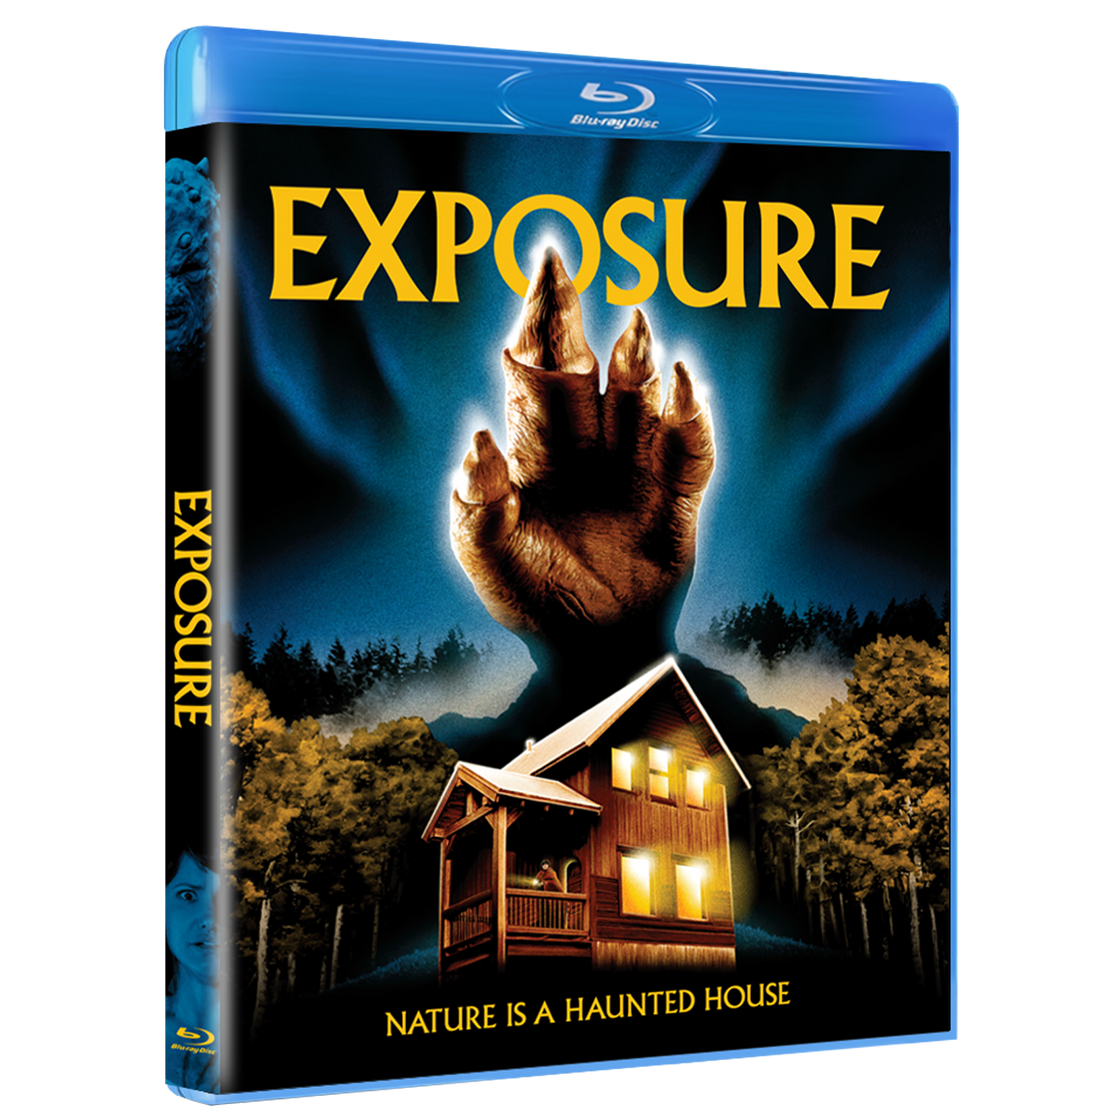 Exposure Special Collectors Edition Blu-ray